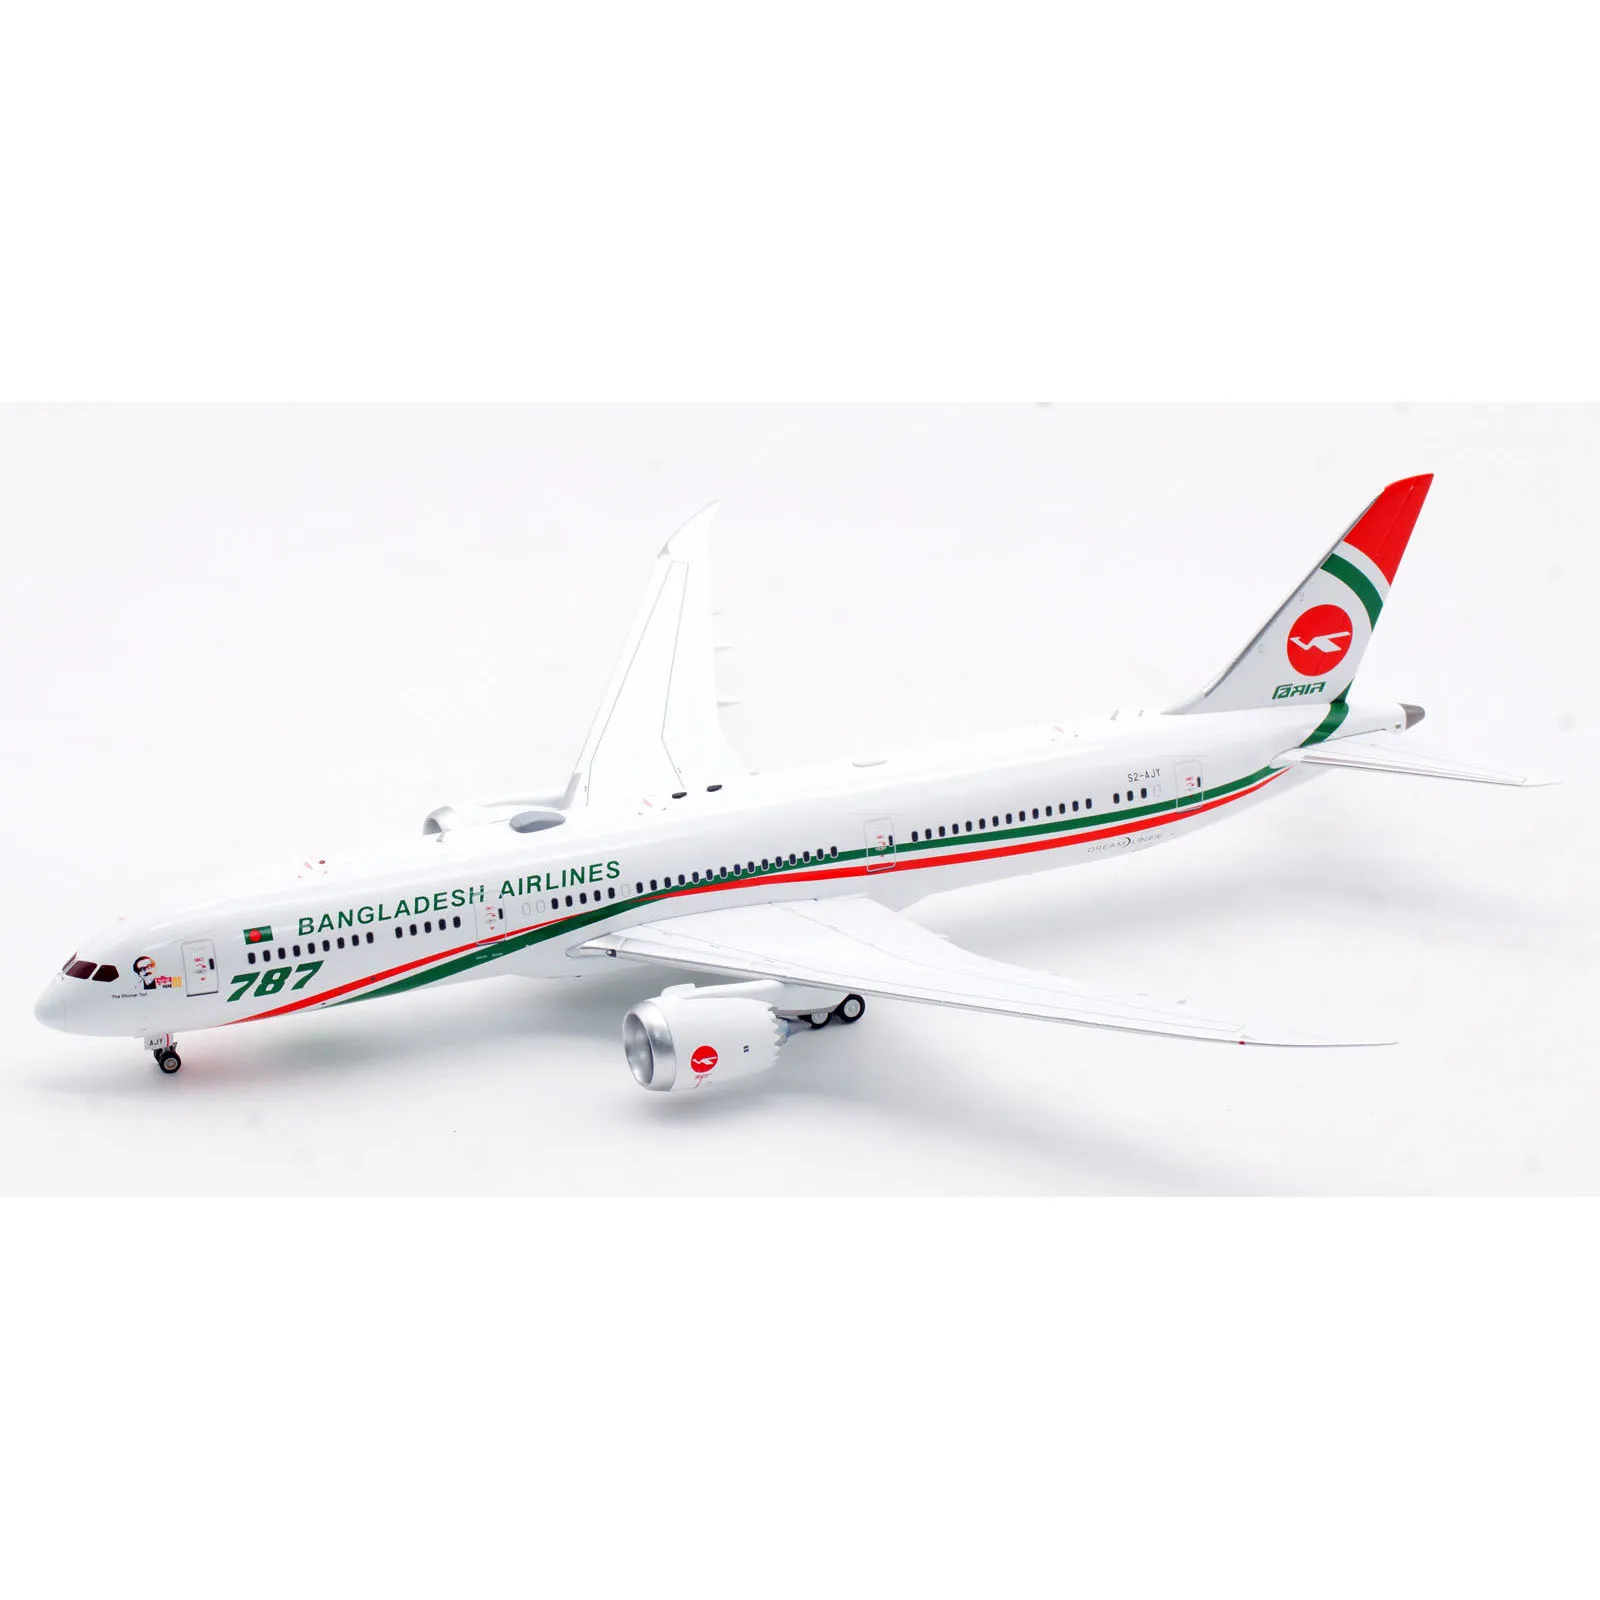 If789ey1123 Gelegeerd Verzamelvliegtuig Cadeau Aan Boord 1:200 Biman Bangladesh Airlines Boeing B787-9 Diecast Vliegtuig Model S2-AJY